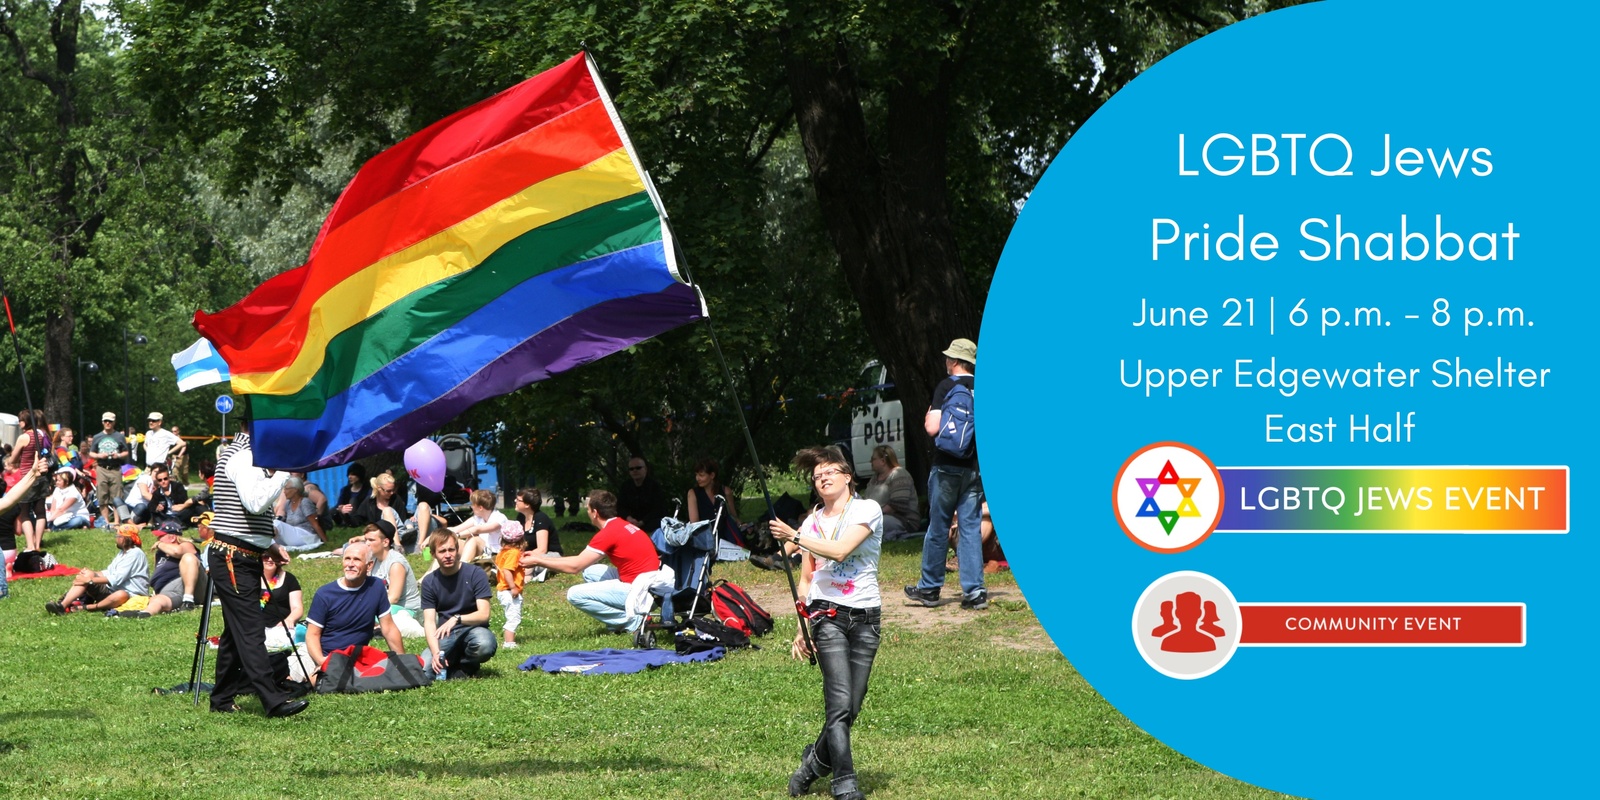 Banner image for LGBTQ Jews Pride Shabbat